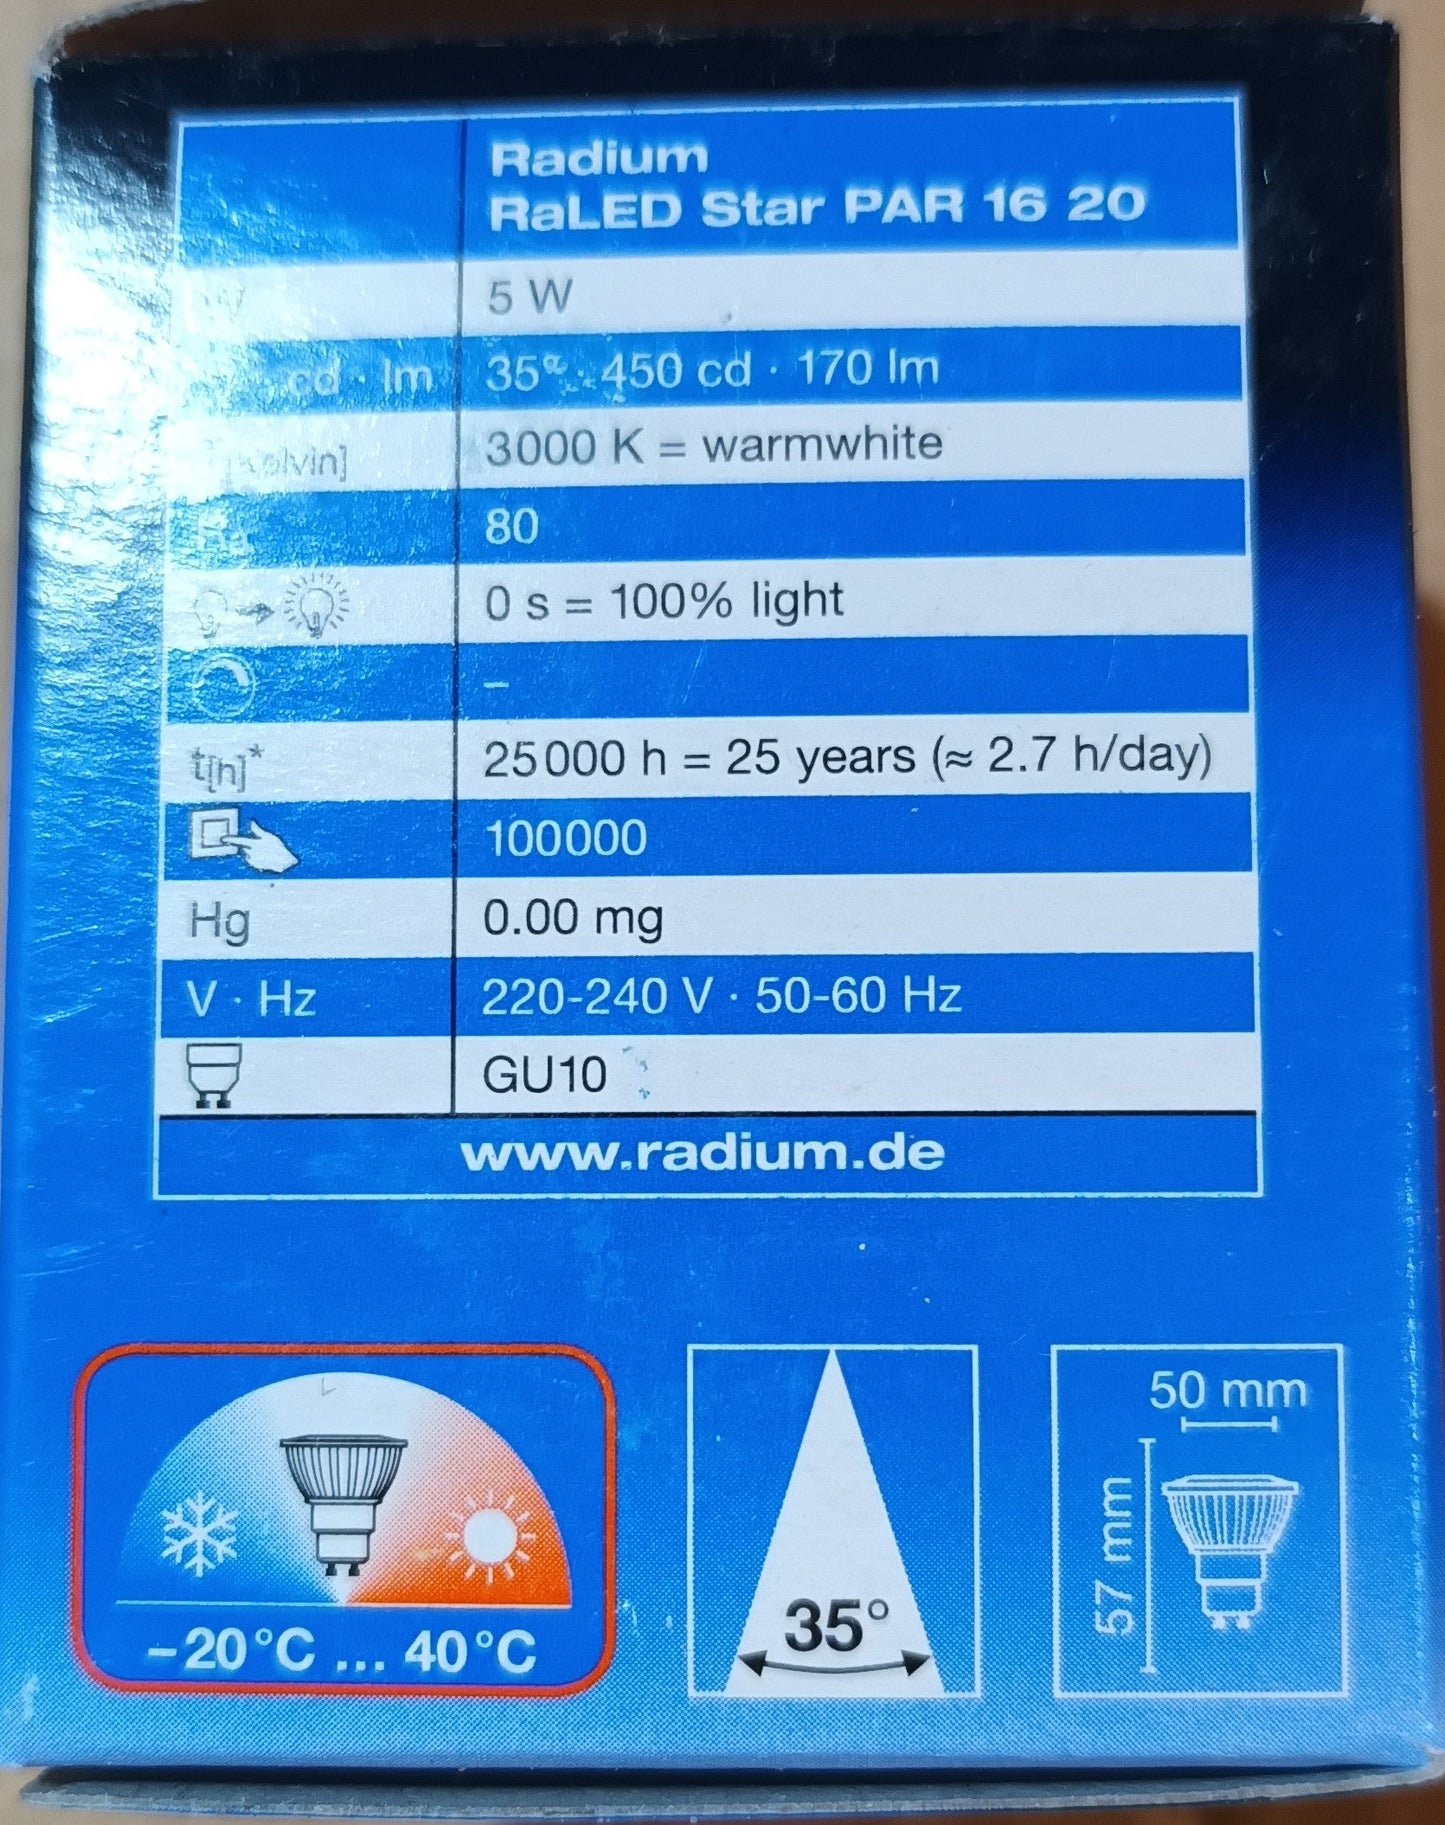 Radium LED Gu10 5 W long life 25,000h